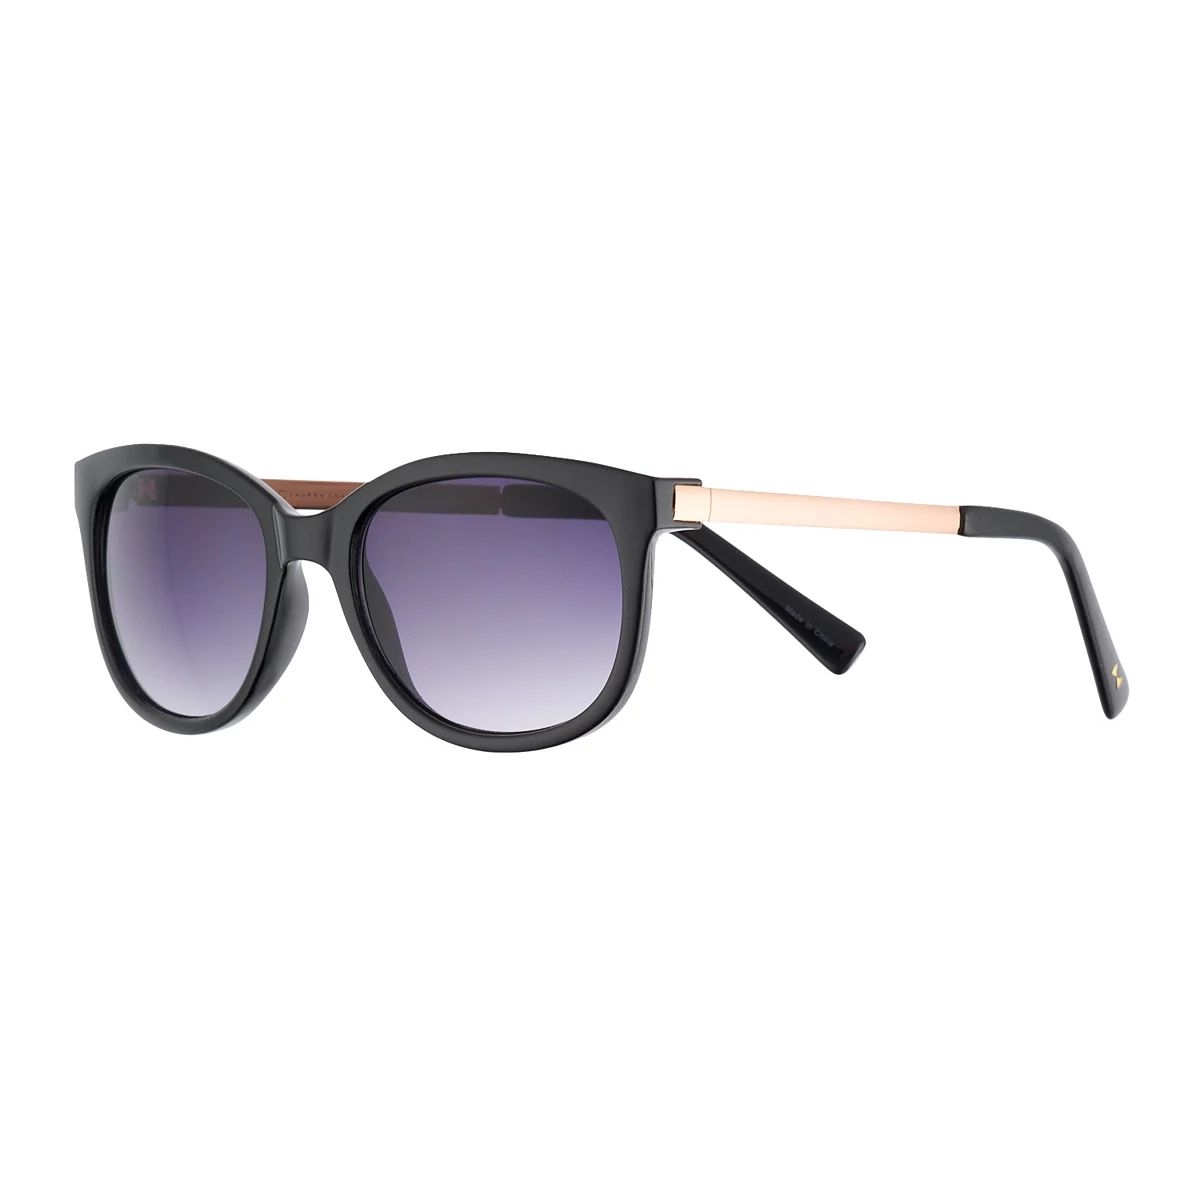 Women's LC Lauren Conrad Lynx Square Sunglasses | Kohl's